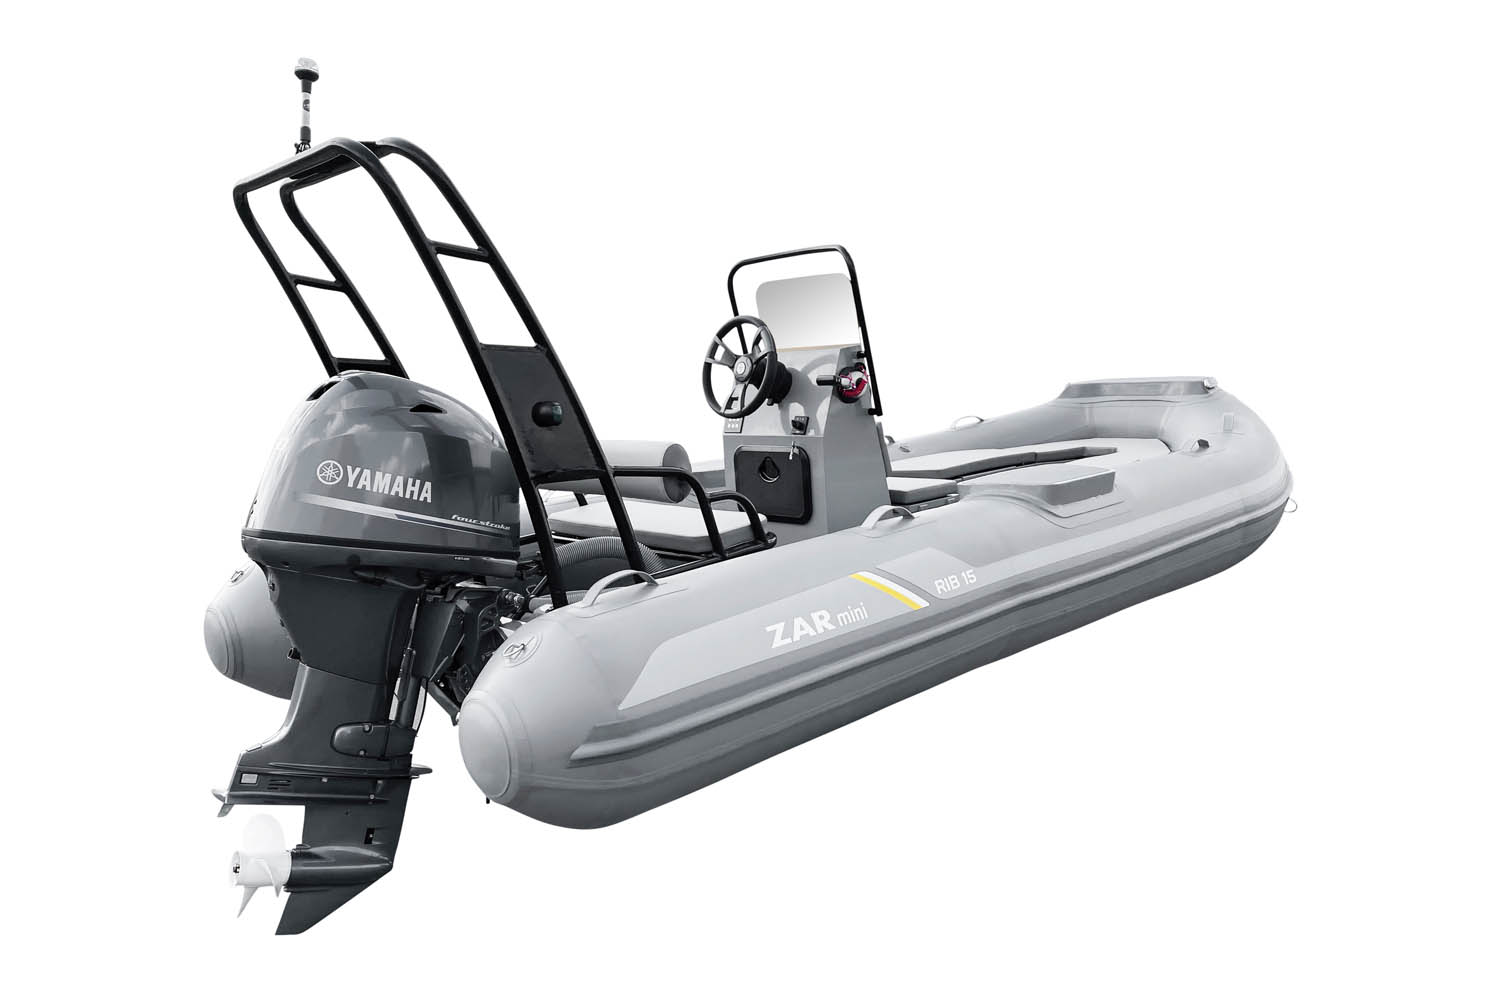 ZAR mini RIB 15 Tender Inflatable Boat - Aluminium Dinghy